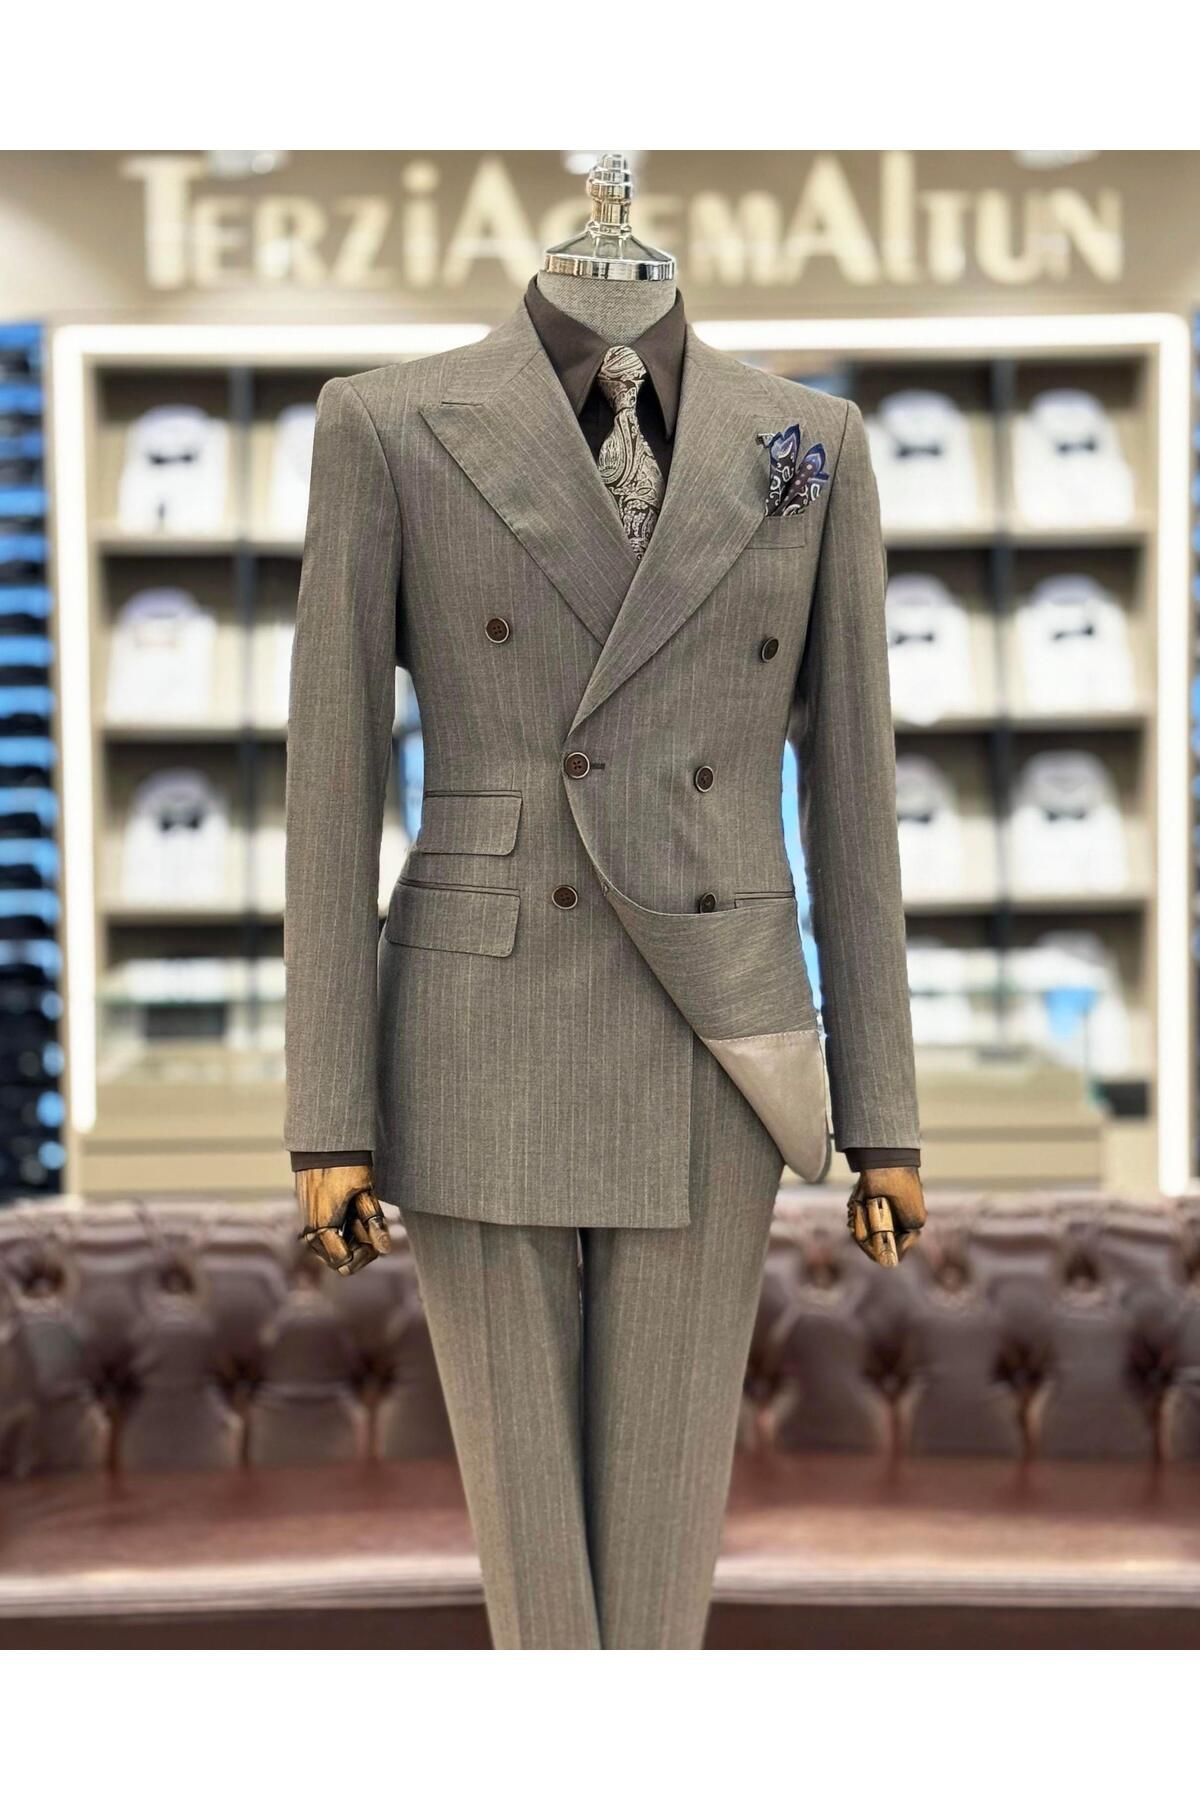 TerziAdemAltun İtalyan stil slim fit çizgili kruvaze ceket pantolon takım elbise kahverengi T11690